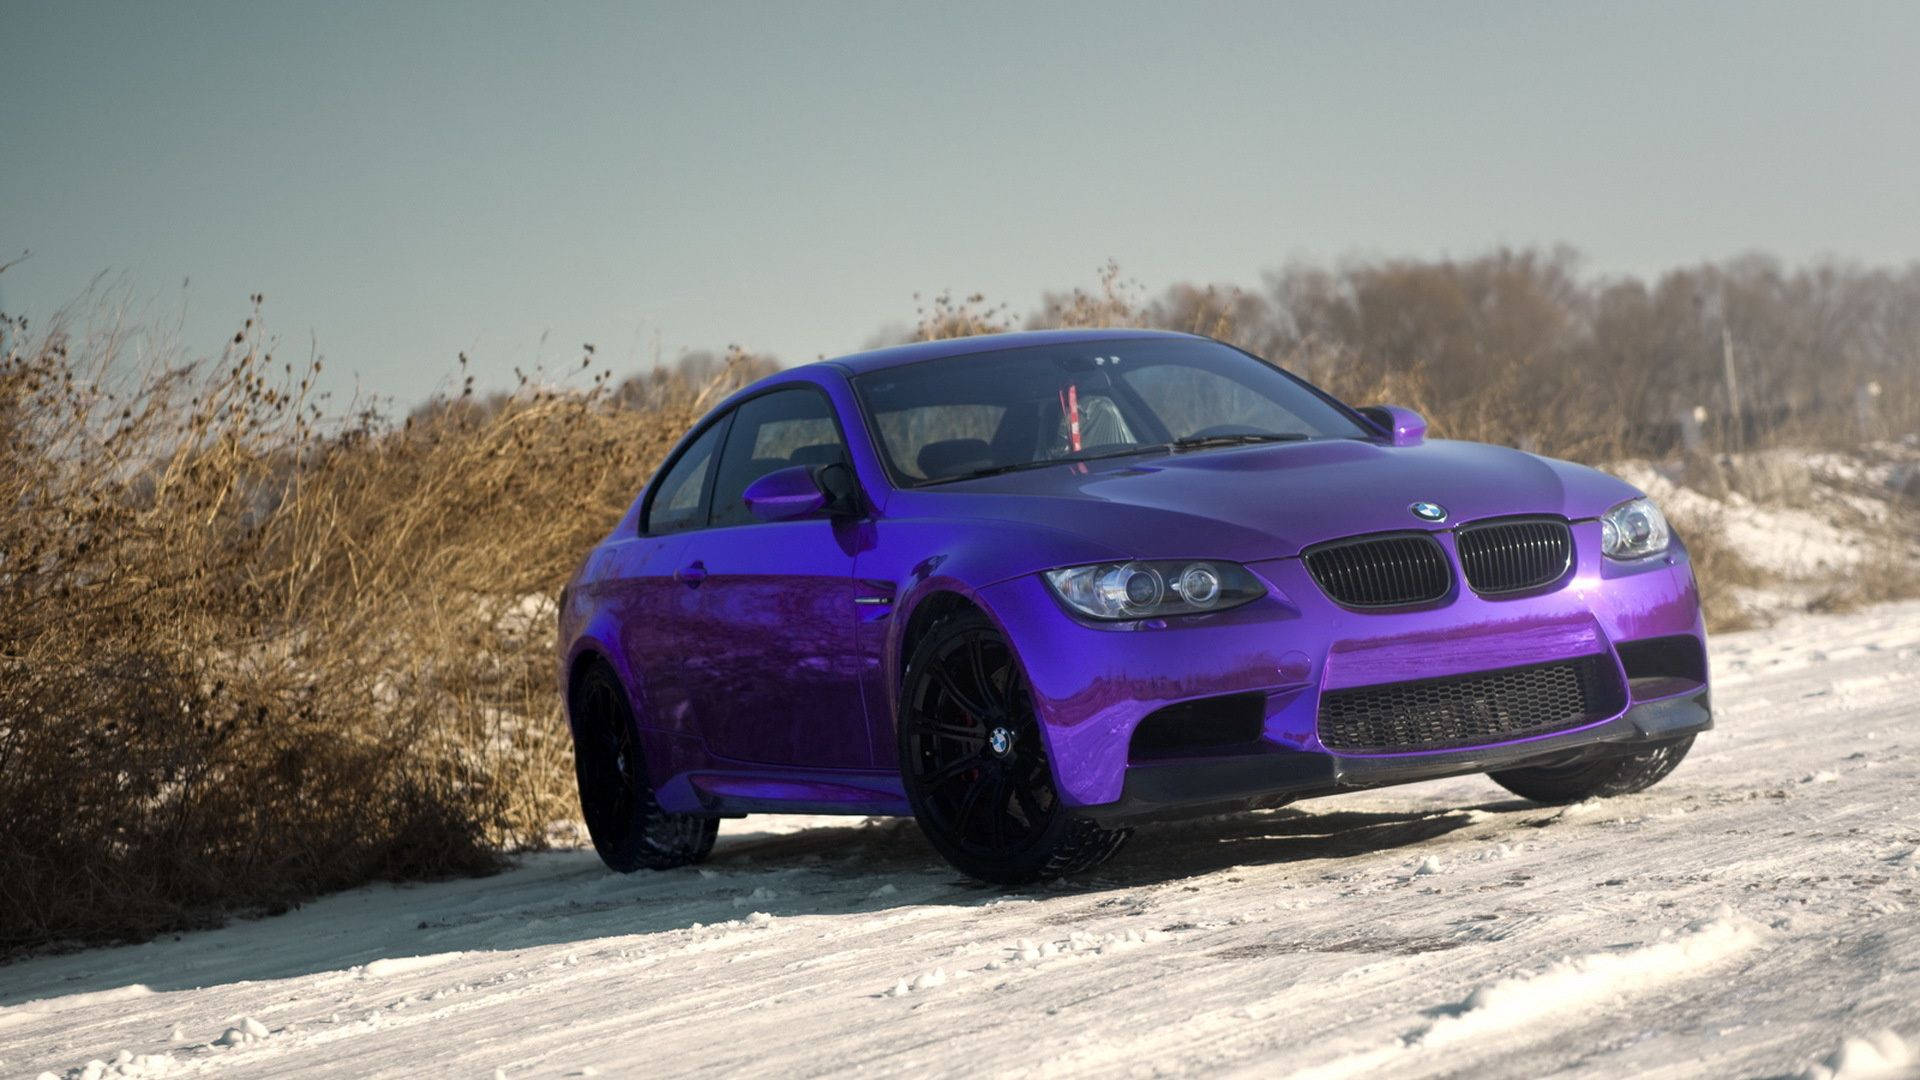 Purple Chrome Luxury Car Picture